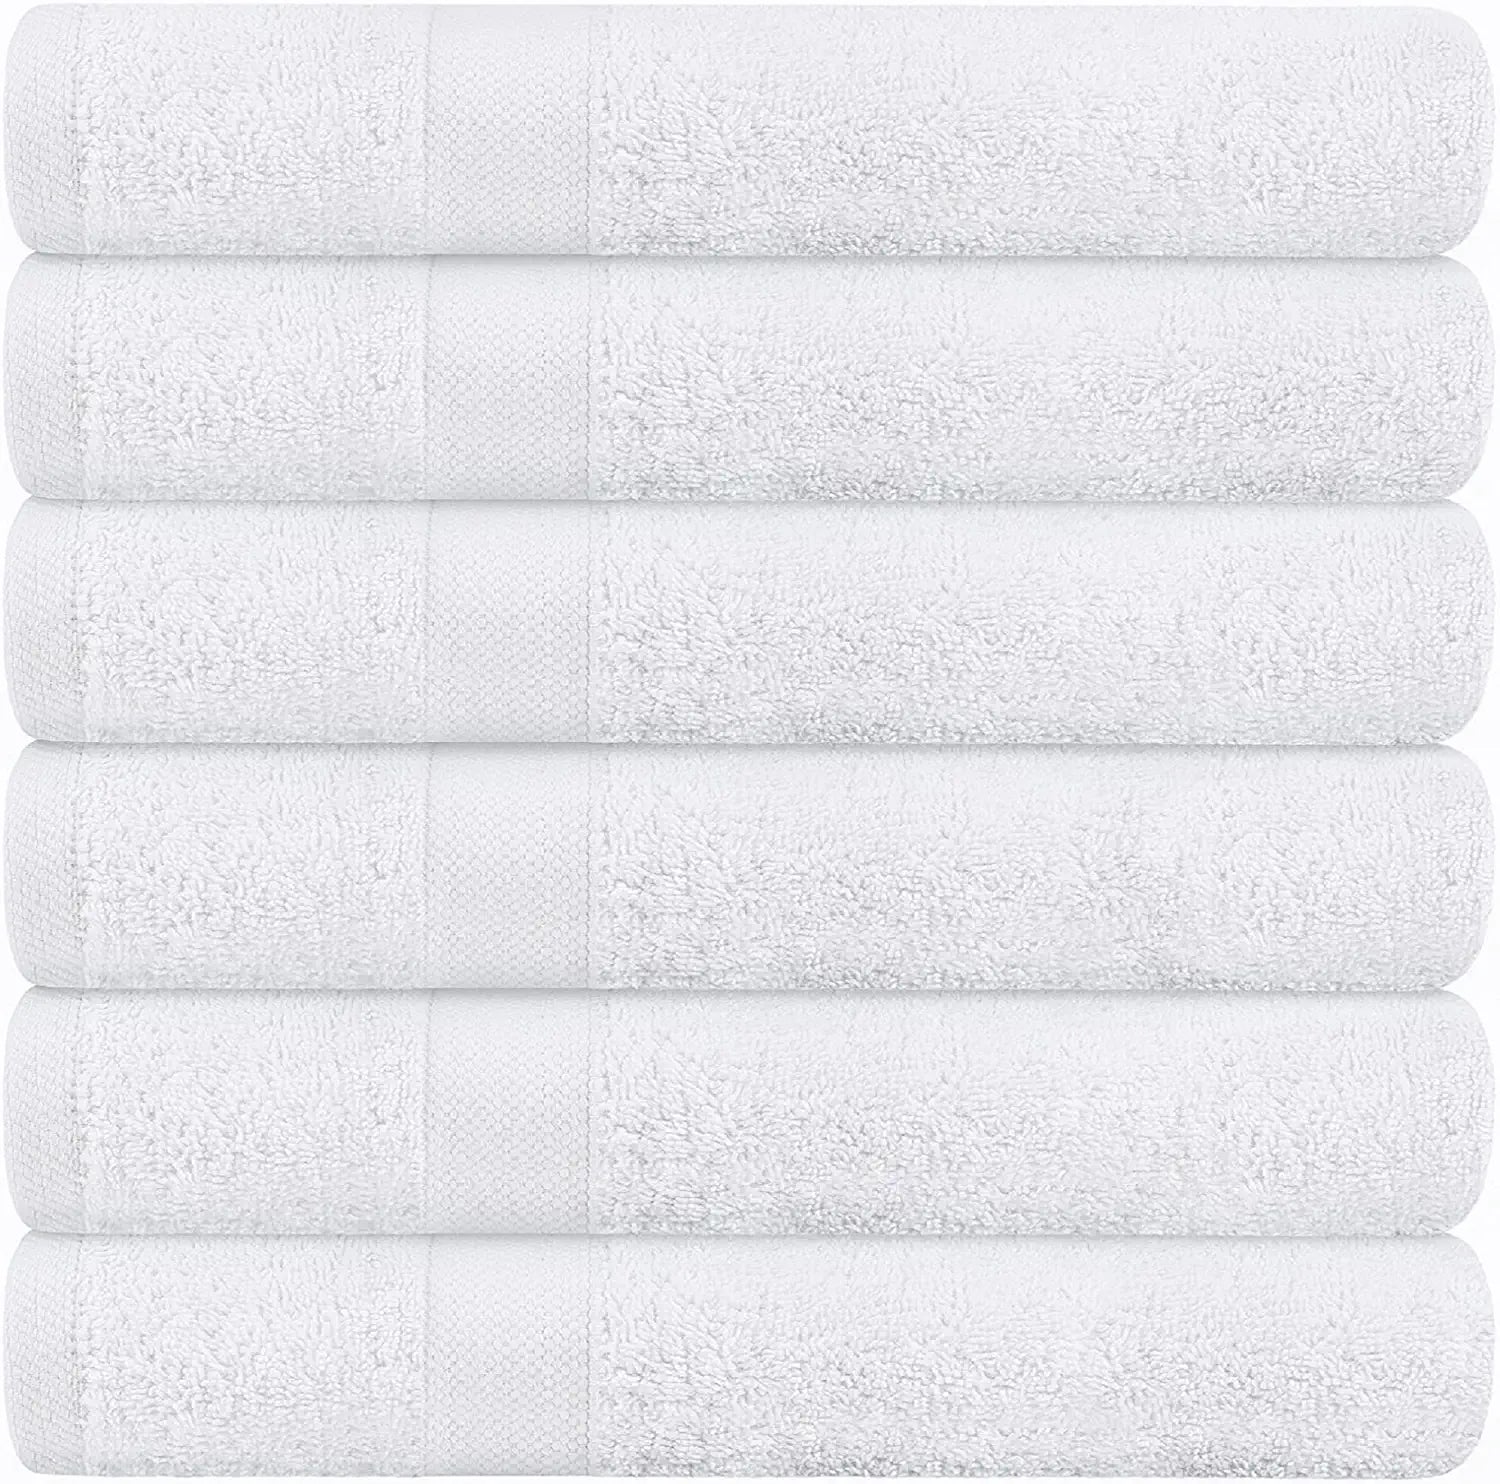 white small bath towels